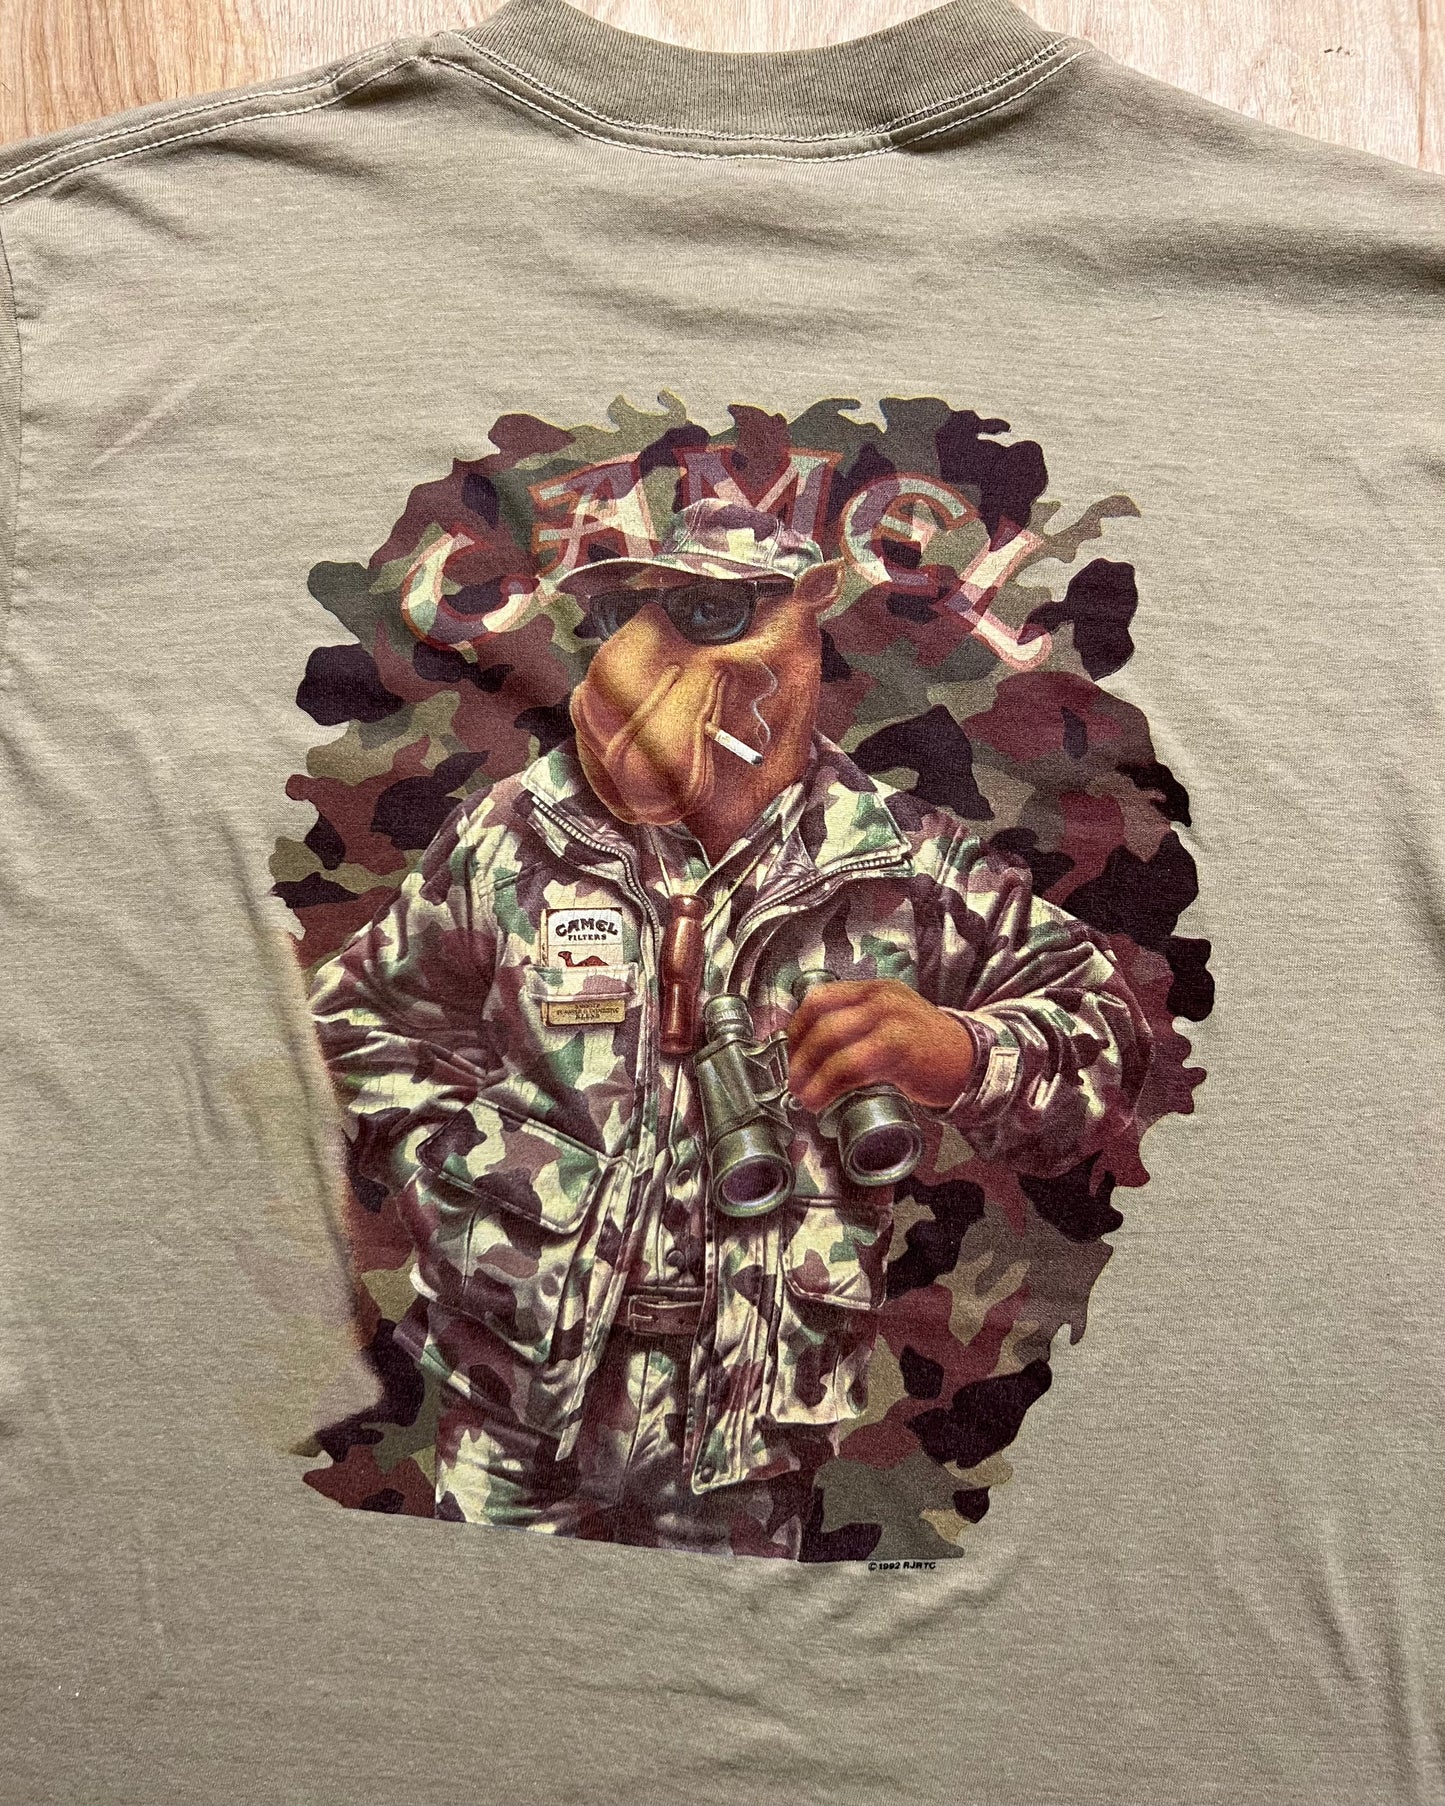 1992 Joe Camel Single Stitch Camouflage Pocket T-Shirt